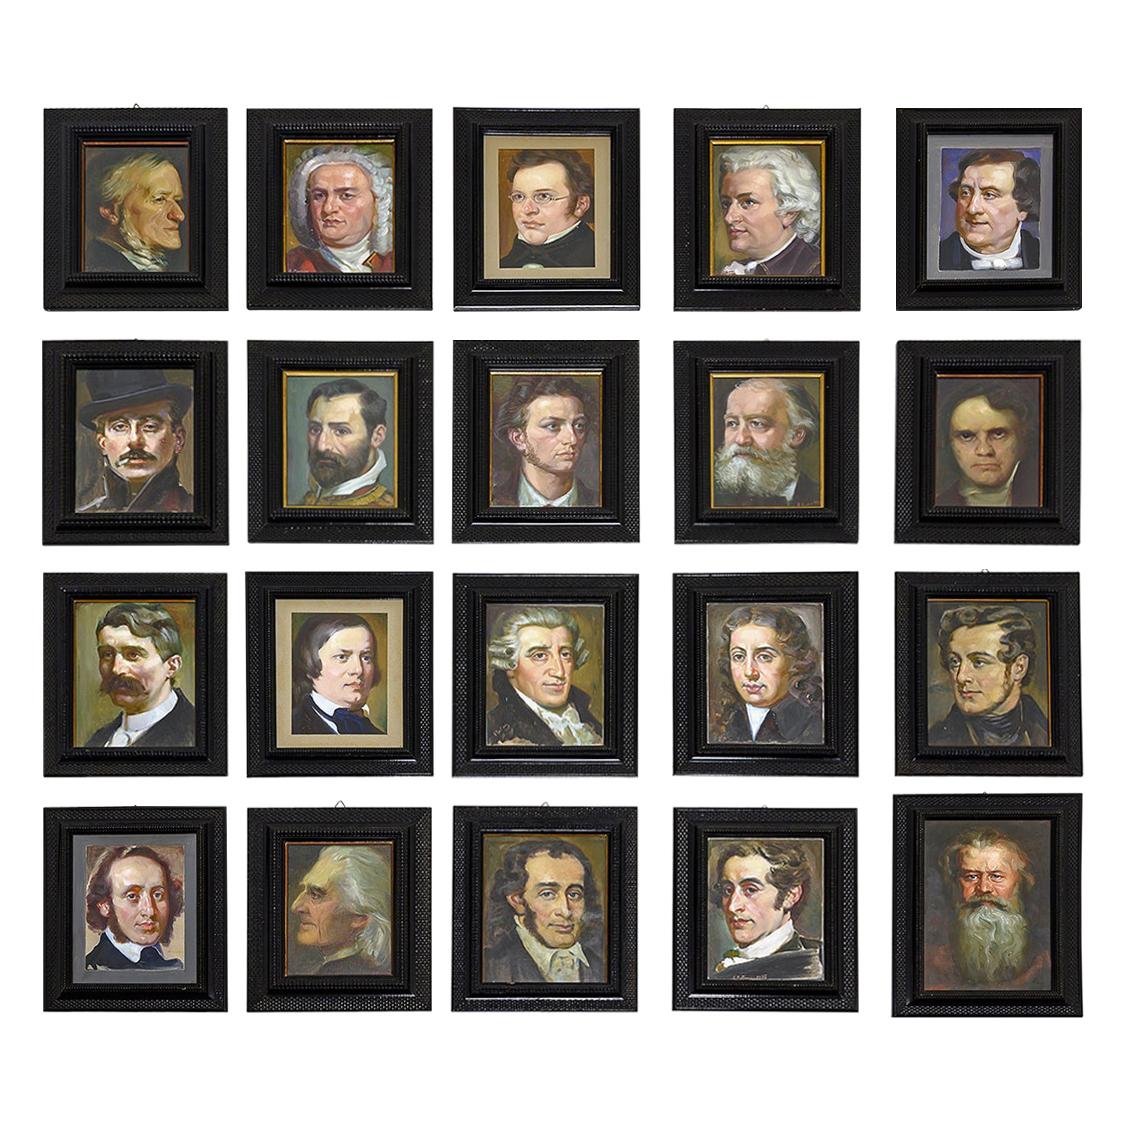 Twenty Italian Portraits Paintings by Cartone 1935 Twenty Composers Portraits